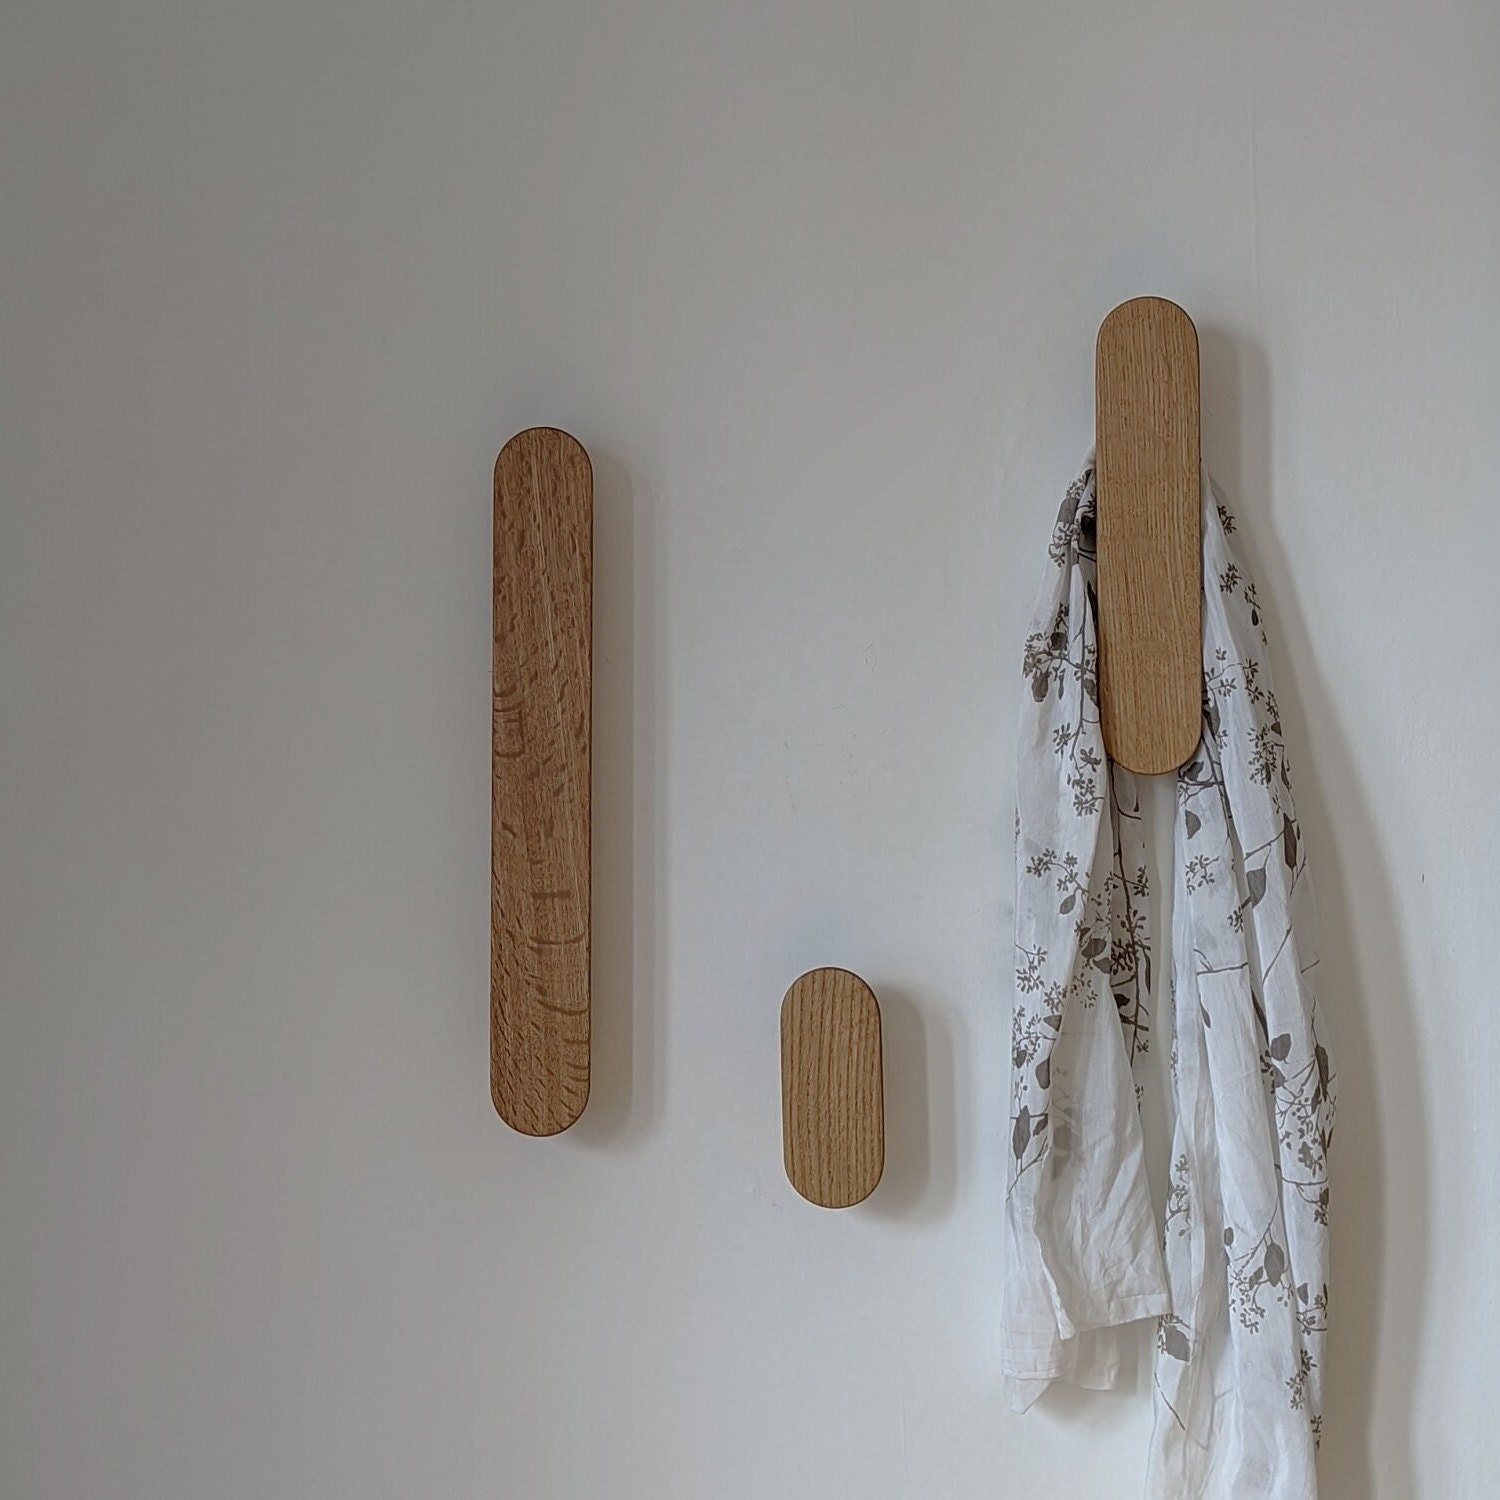 Bedroom Nordic Home Decor Hook Wall Hook Wood Robe Clothes Hanger